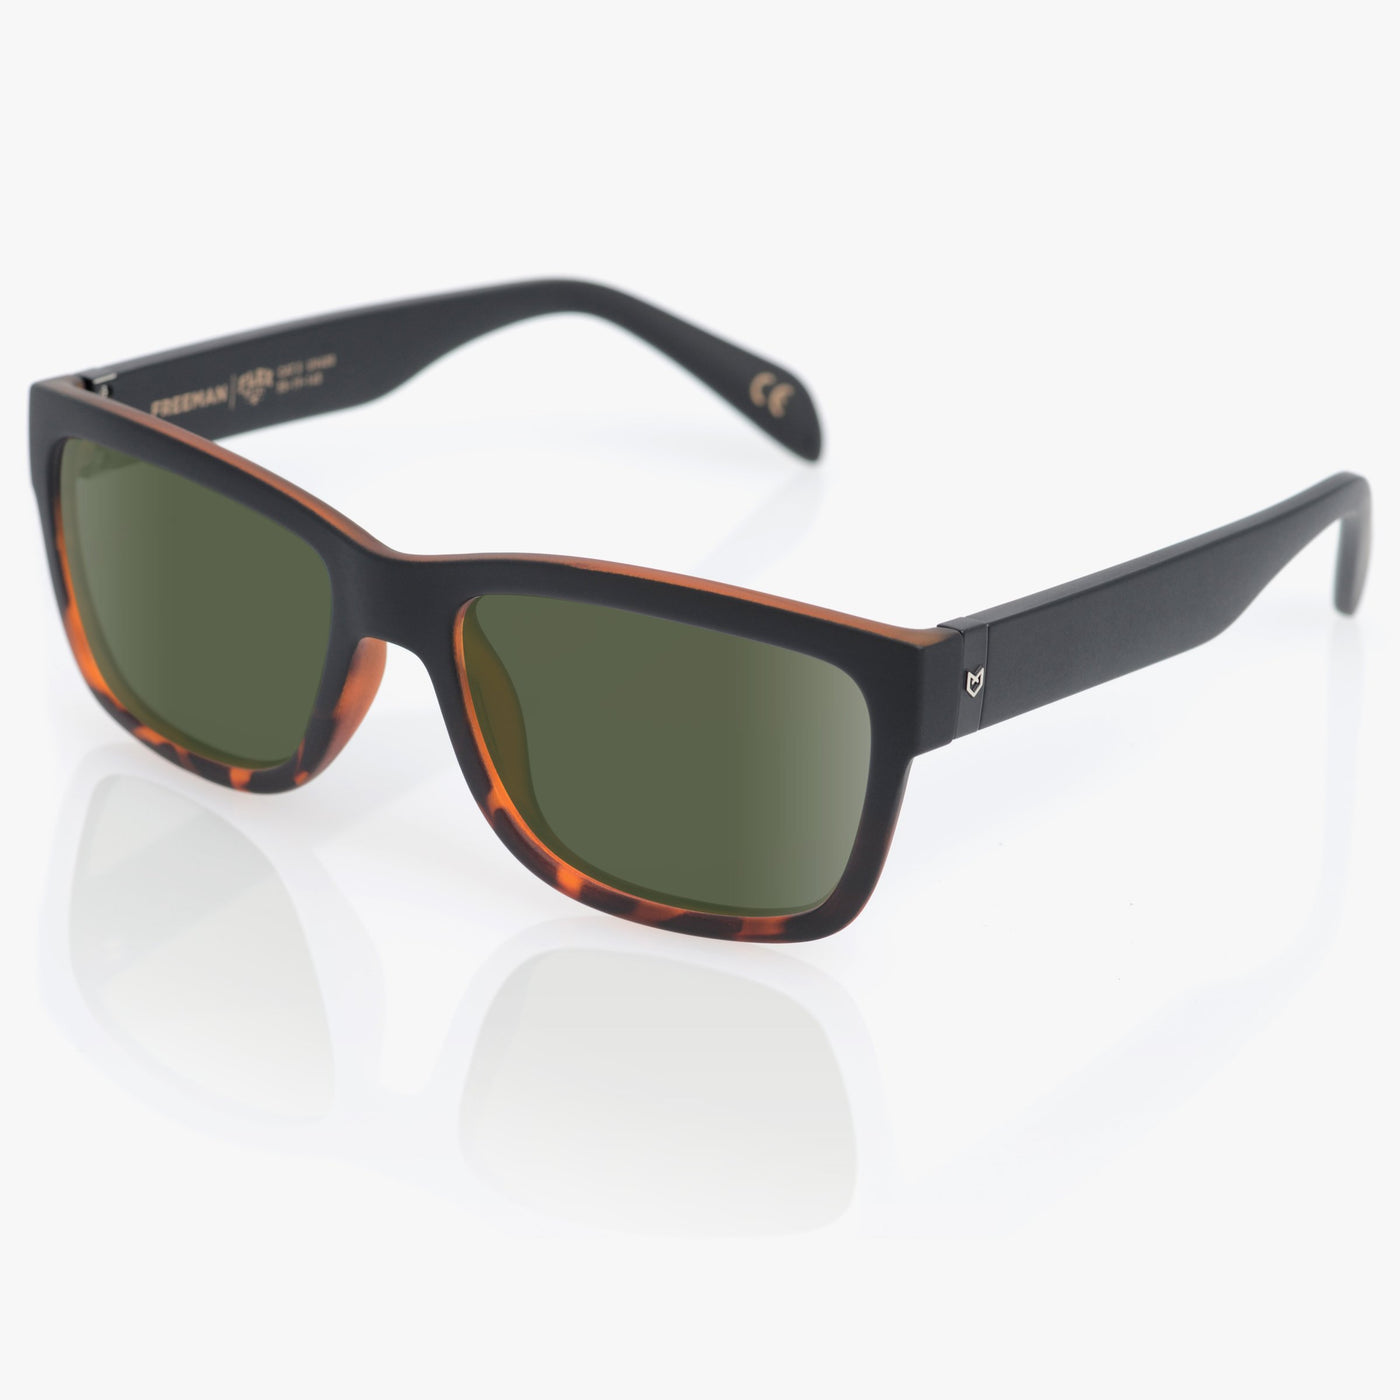 retro tortoiseshell sunglasses for men